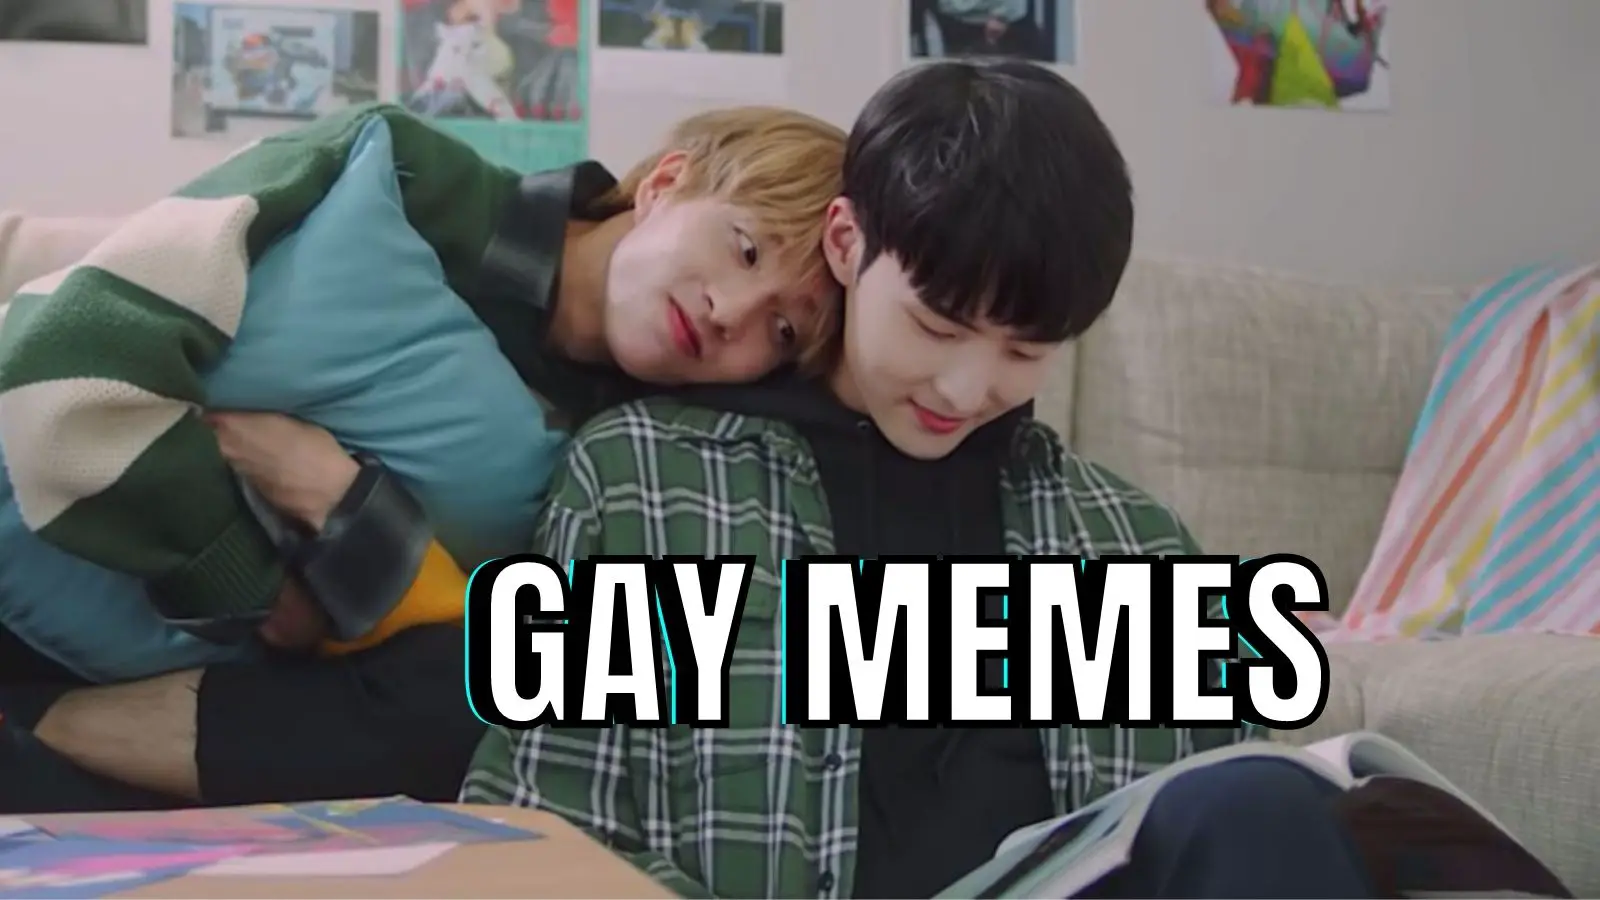 Funny Gay Memes on LGBTQ